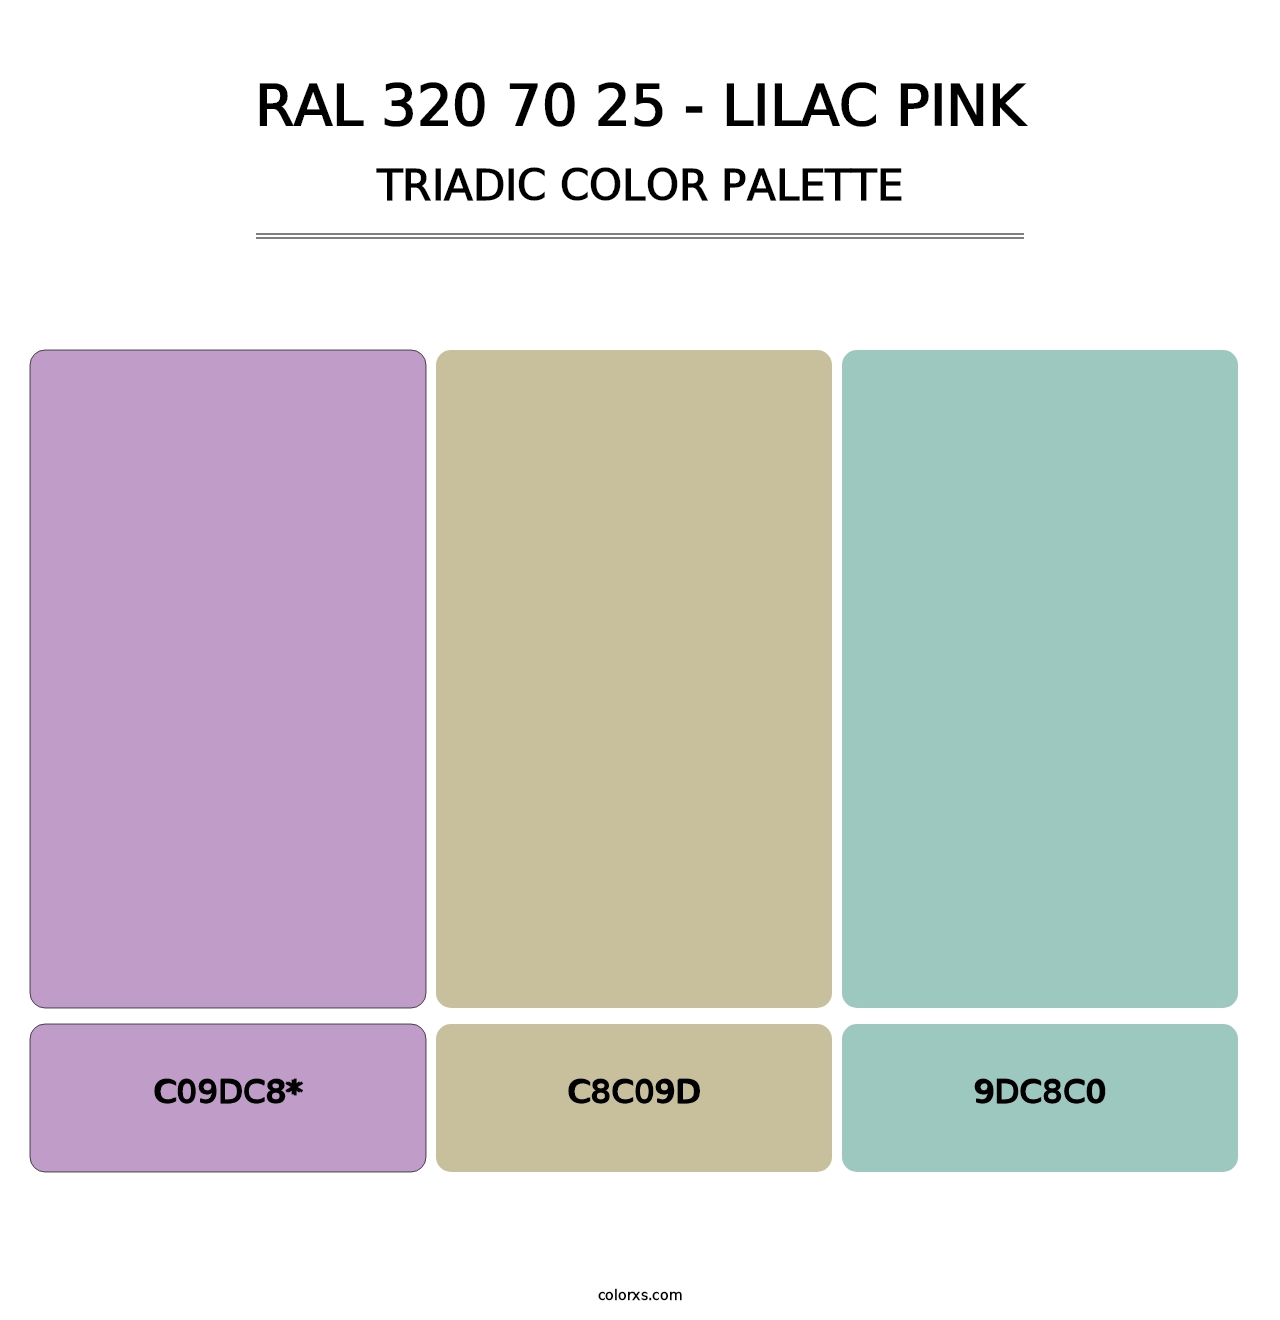 RAL 320 70 25 - Lilac Pink - Triadic Color Palette